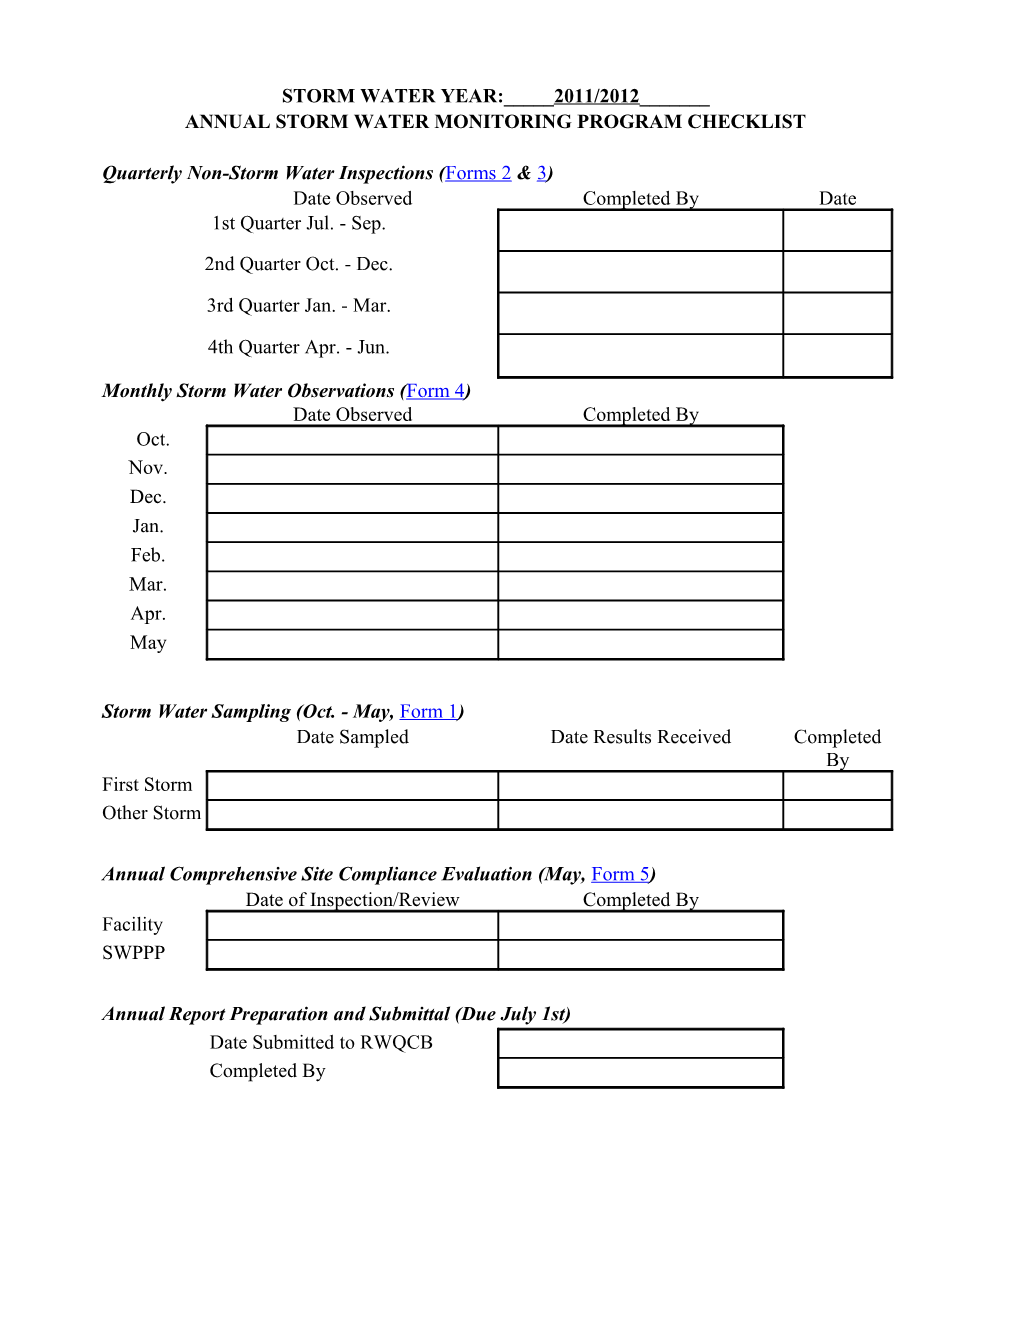 Form 1-Sampling & Analysis Results